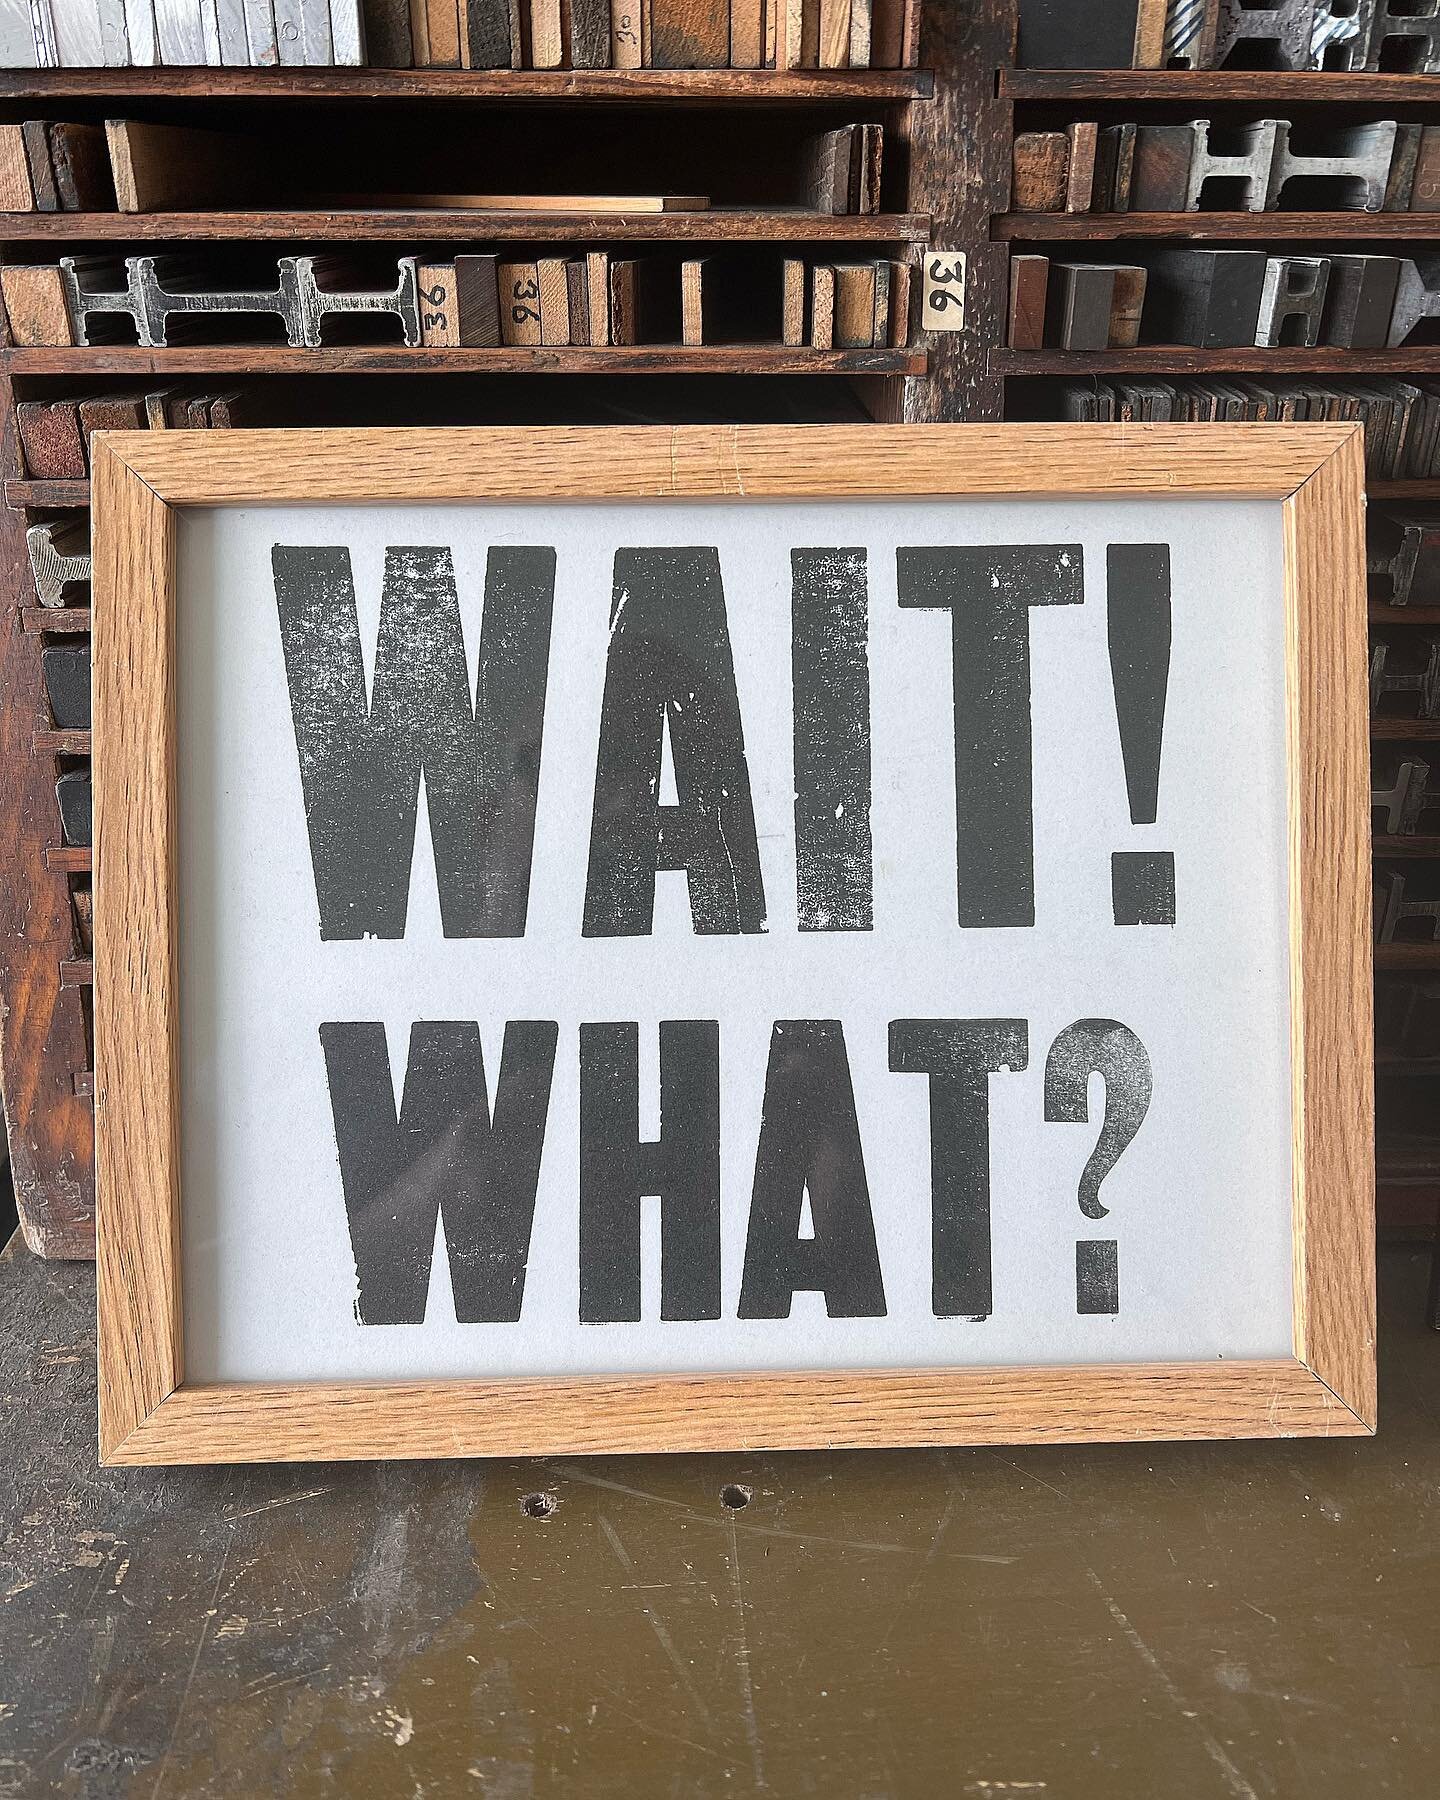 W. Wait! What? @36daysoftype #36daysoftype #36daysoftype_w #letterpress #woodtype